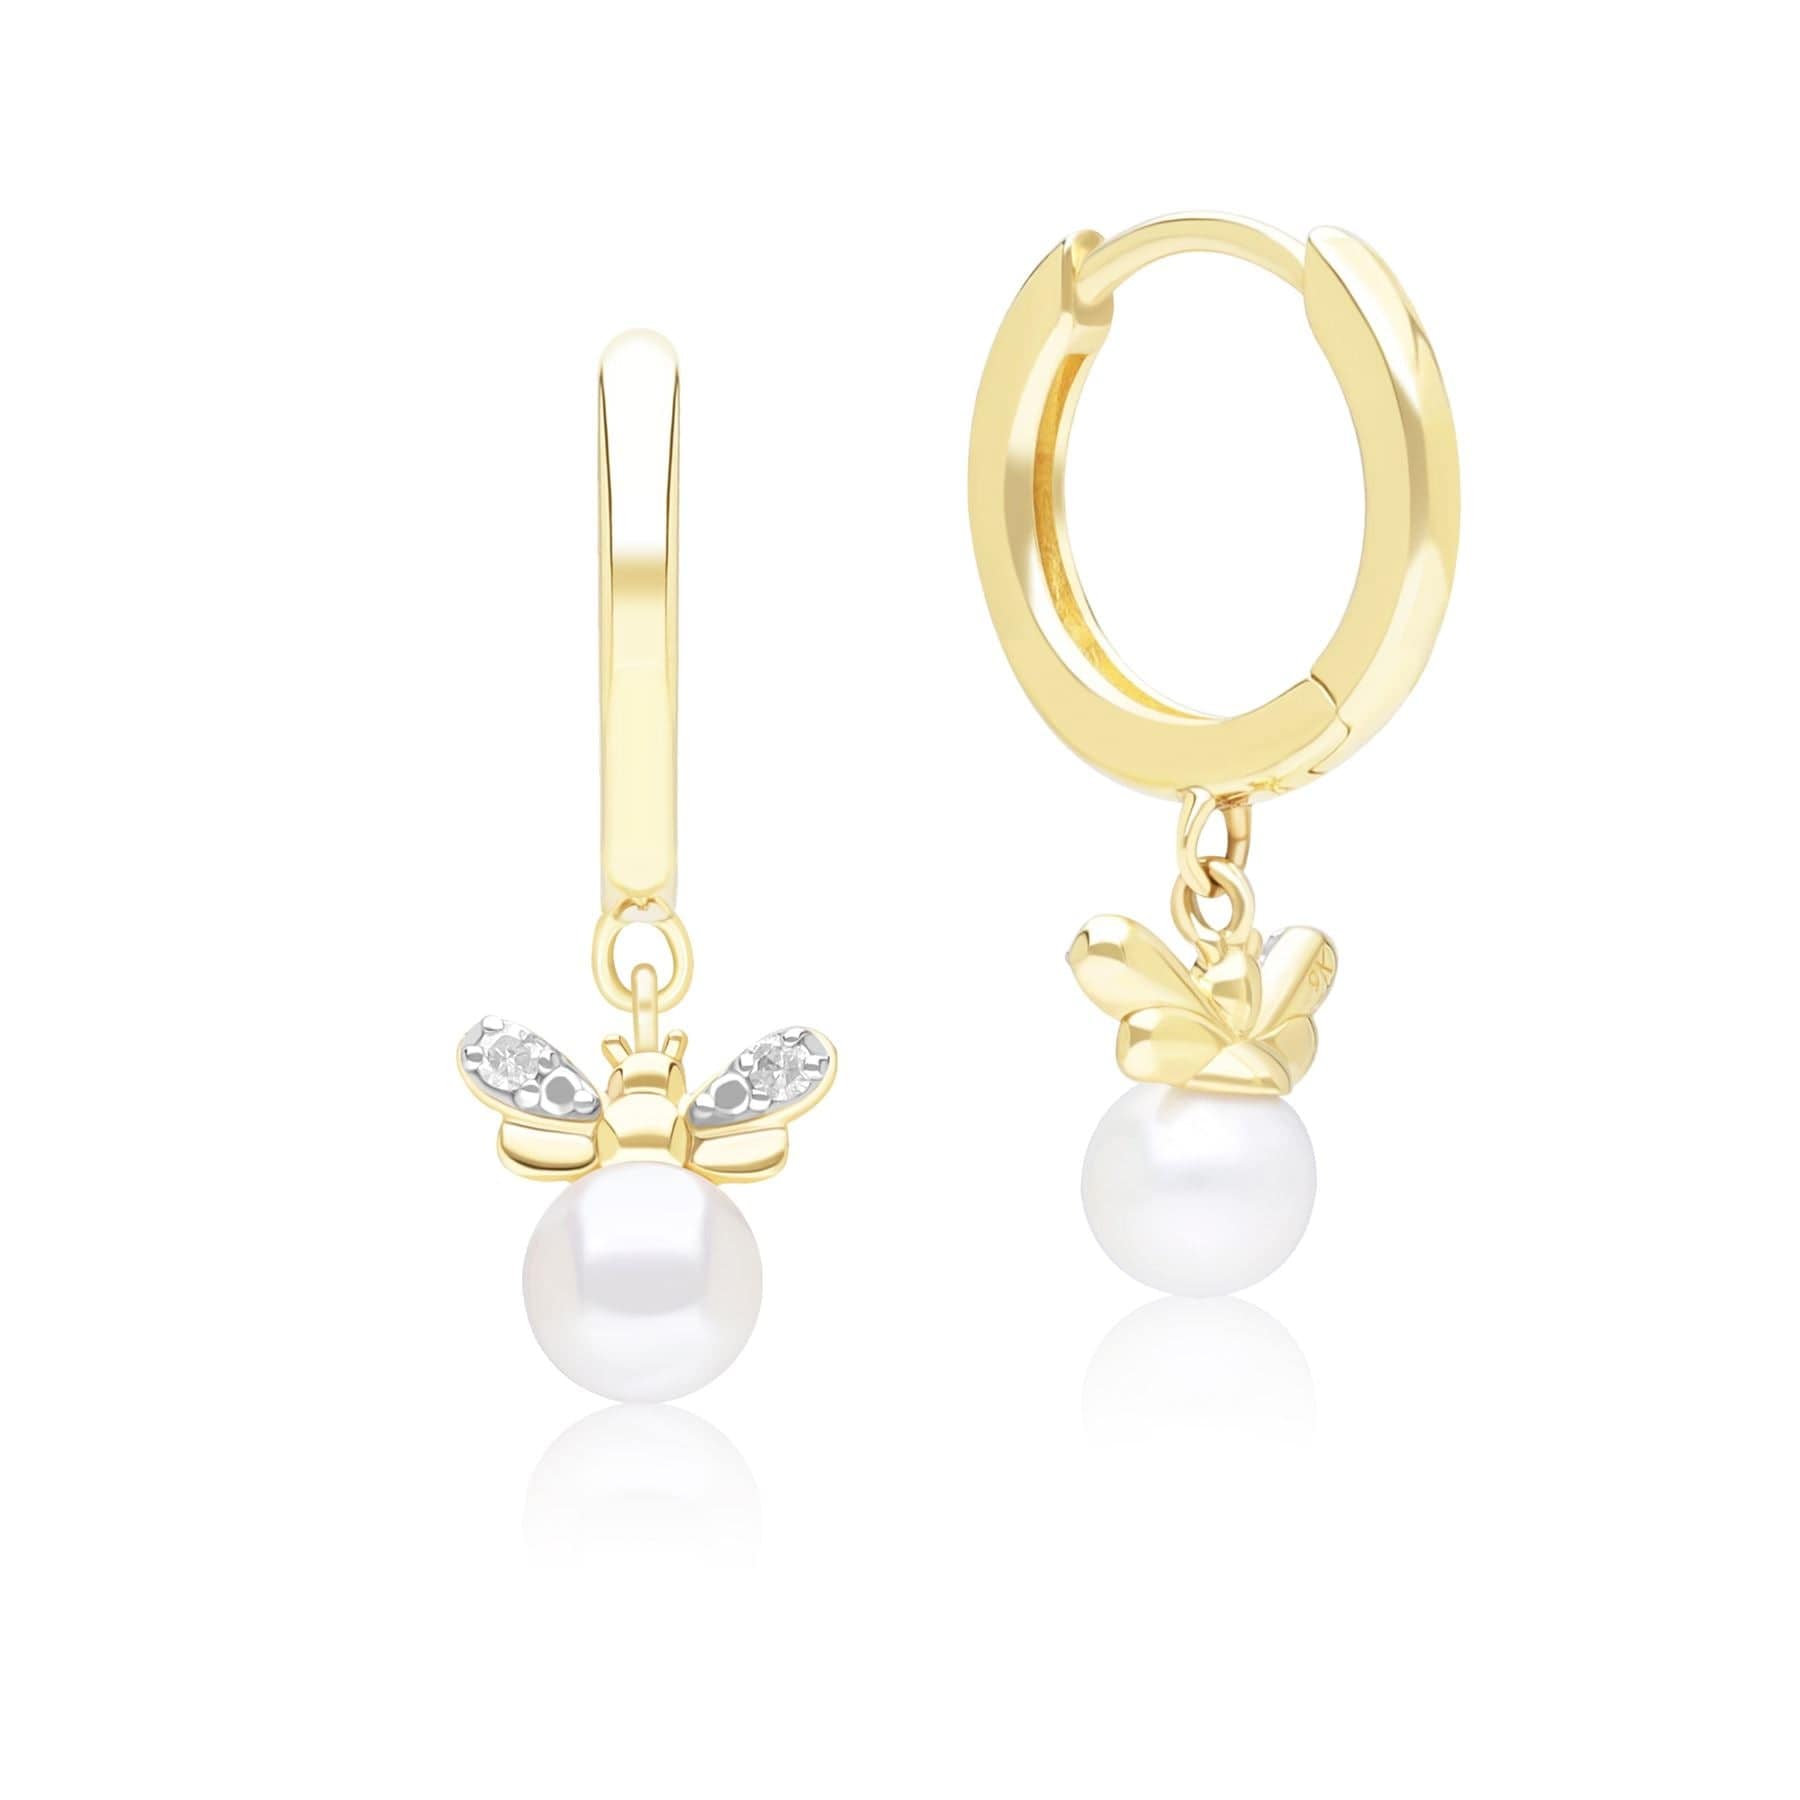 Honeycomb Inspired Pearl and Diamond Bee Hoop Earrings in 9ct Yellow GoldBack  135E1873019